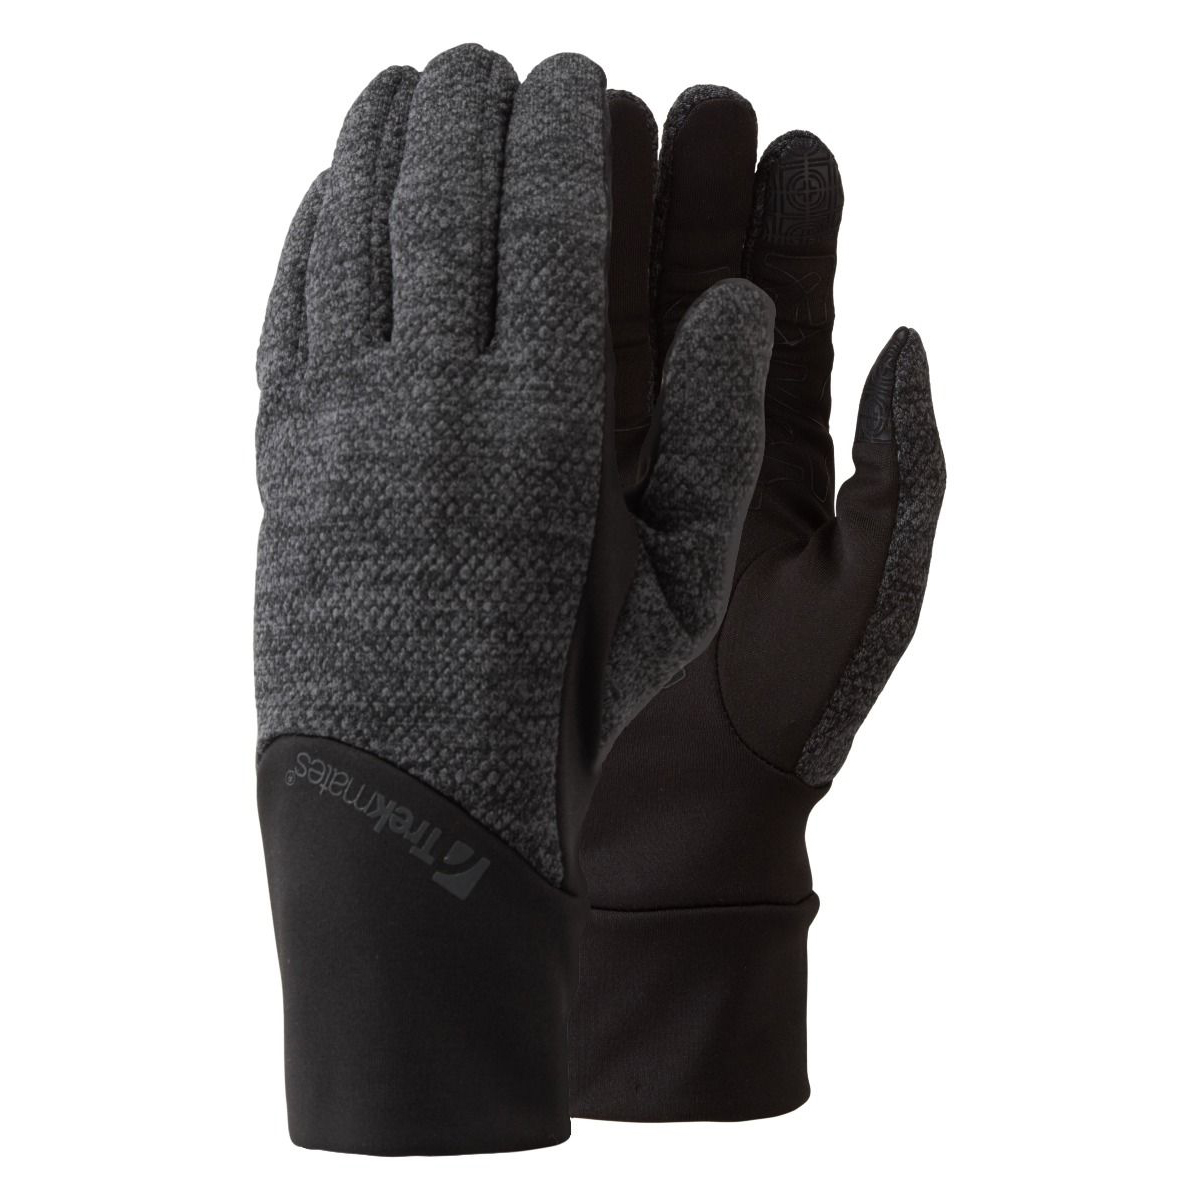 Перчатки Trekmates Harland Glove TM 004141 Dk Grey Marl, размер XL, серые фото 